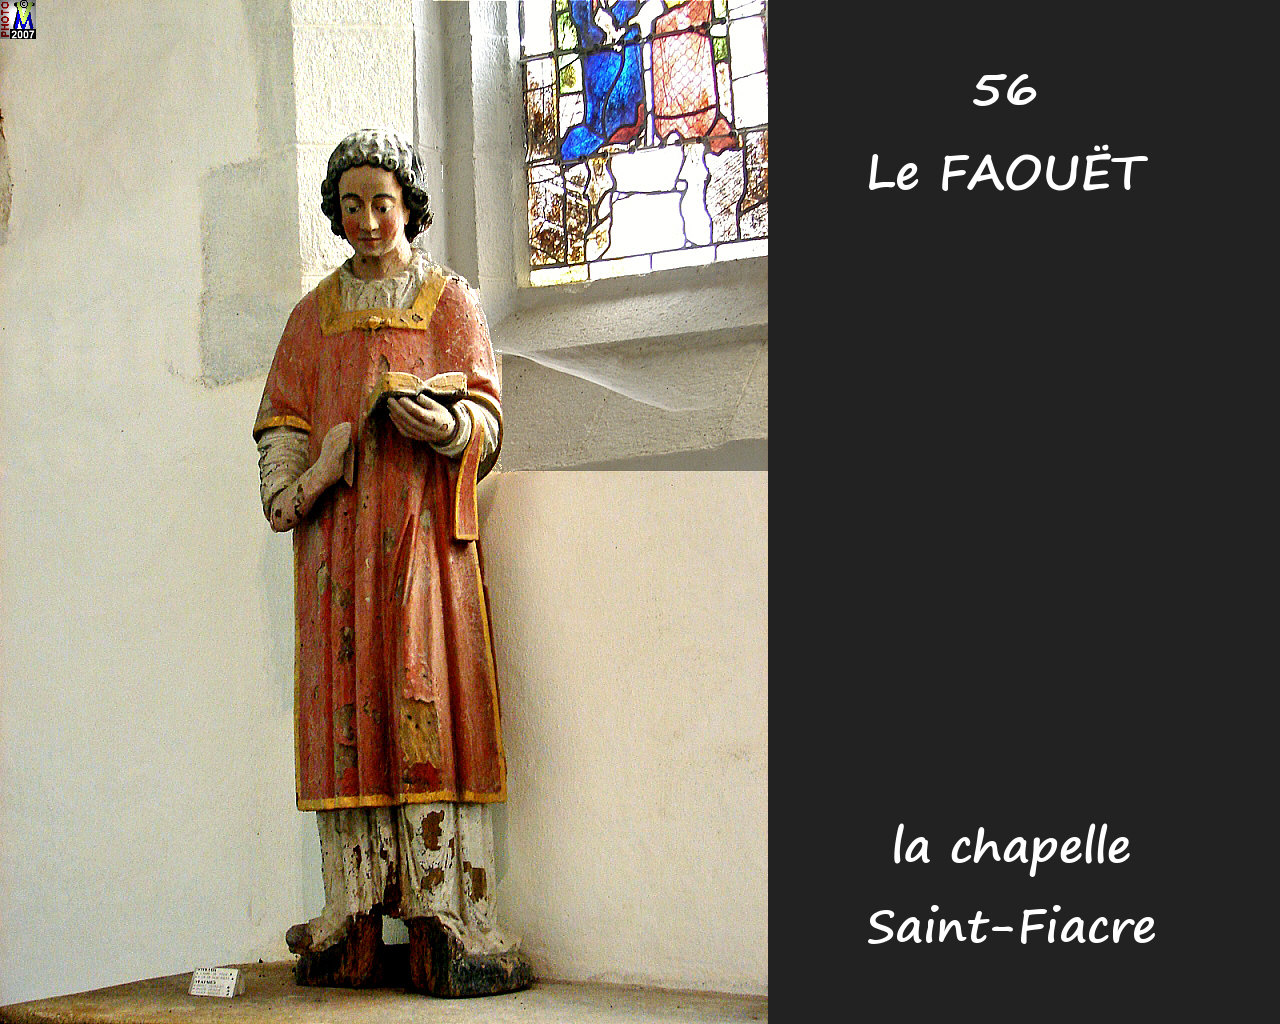 56FAOUET_chapelle-fiacre_340.jpg